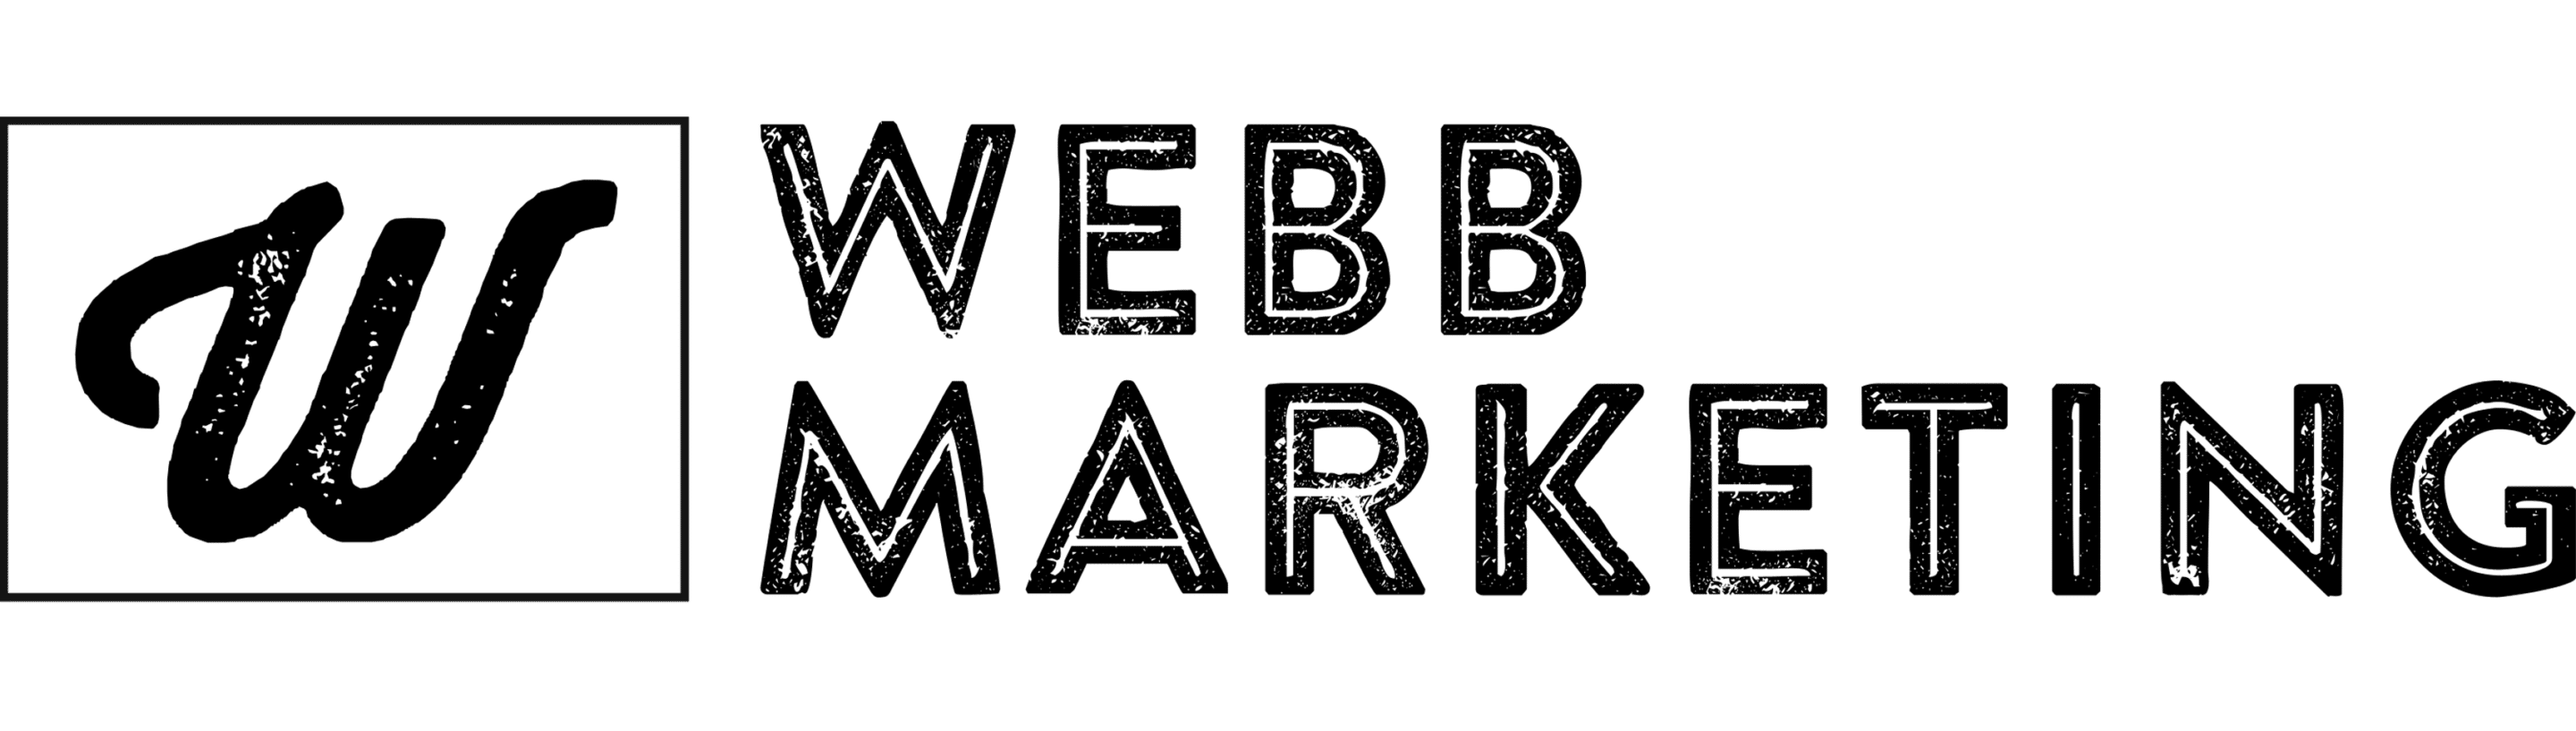 Webb Marketing